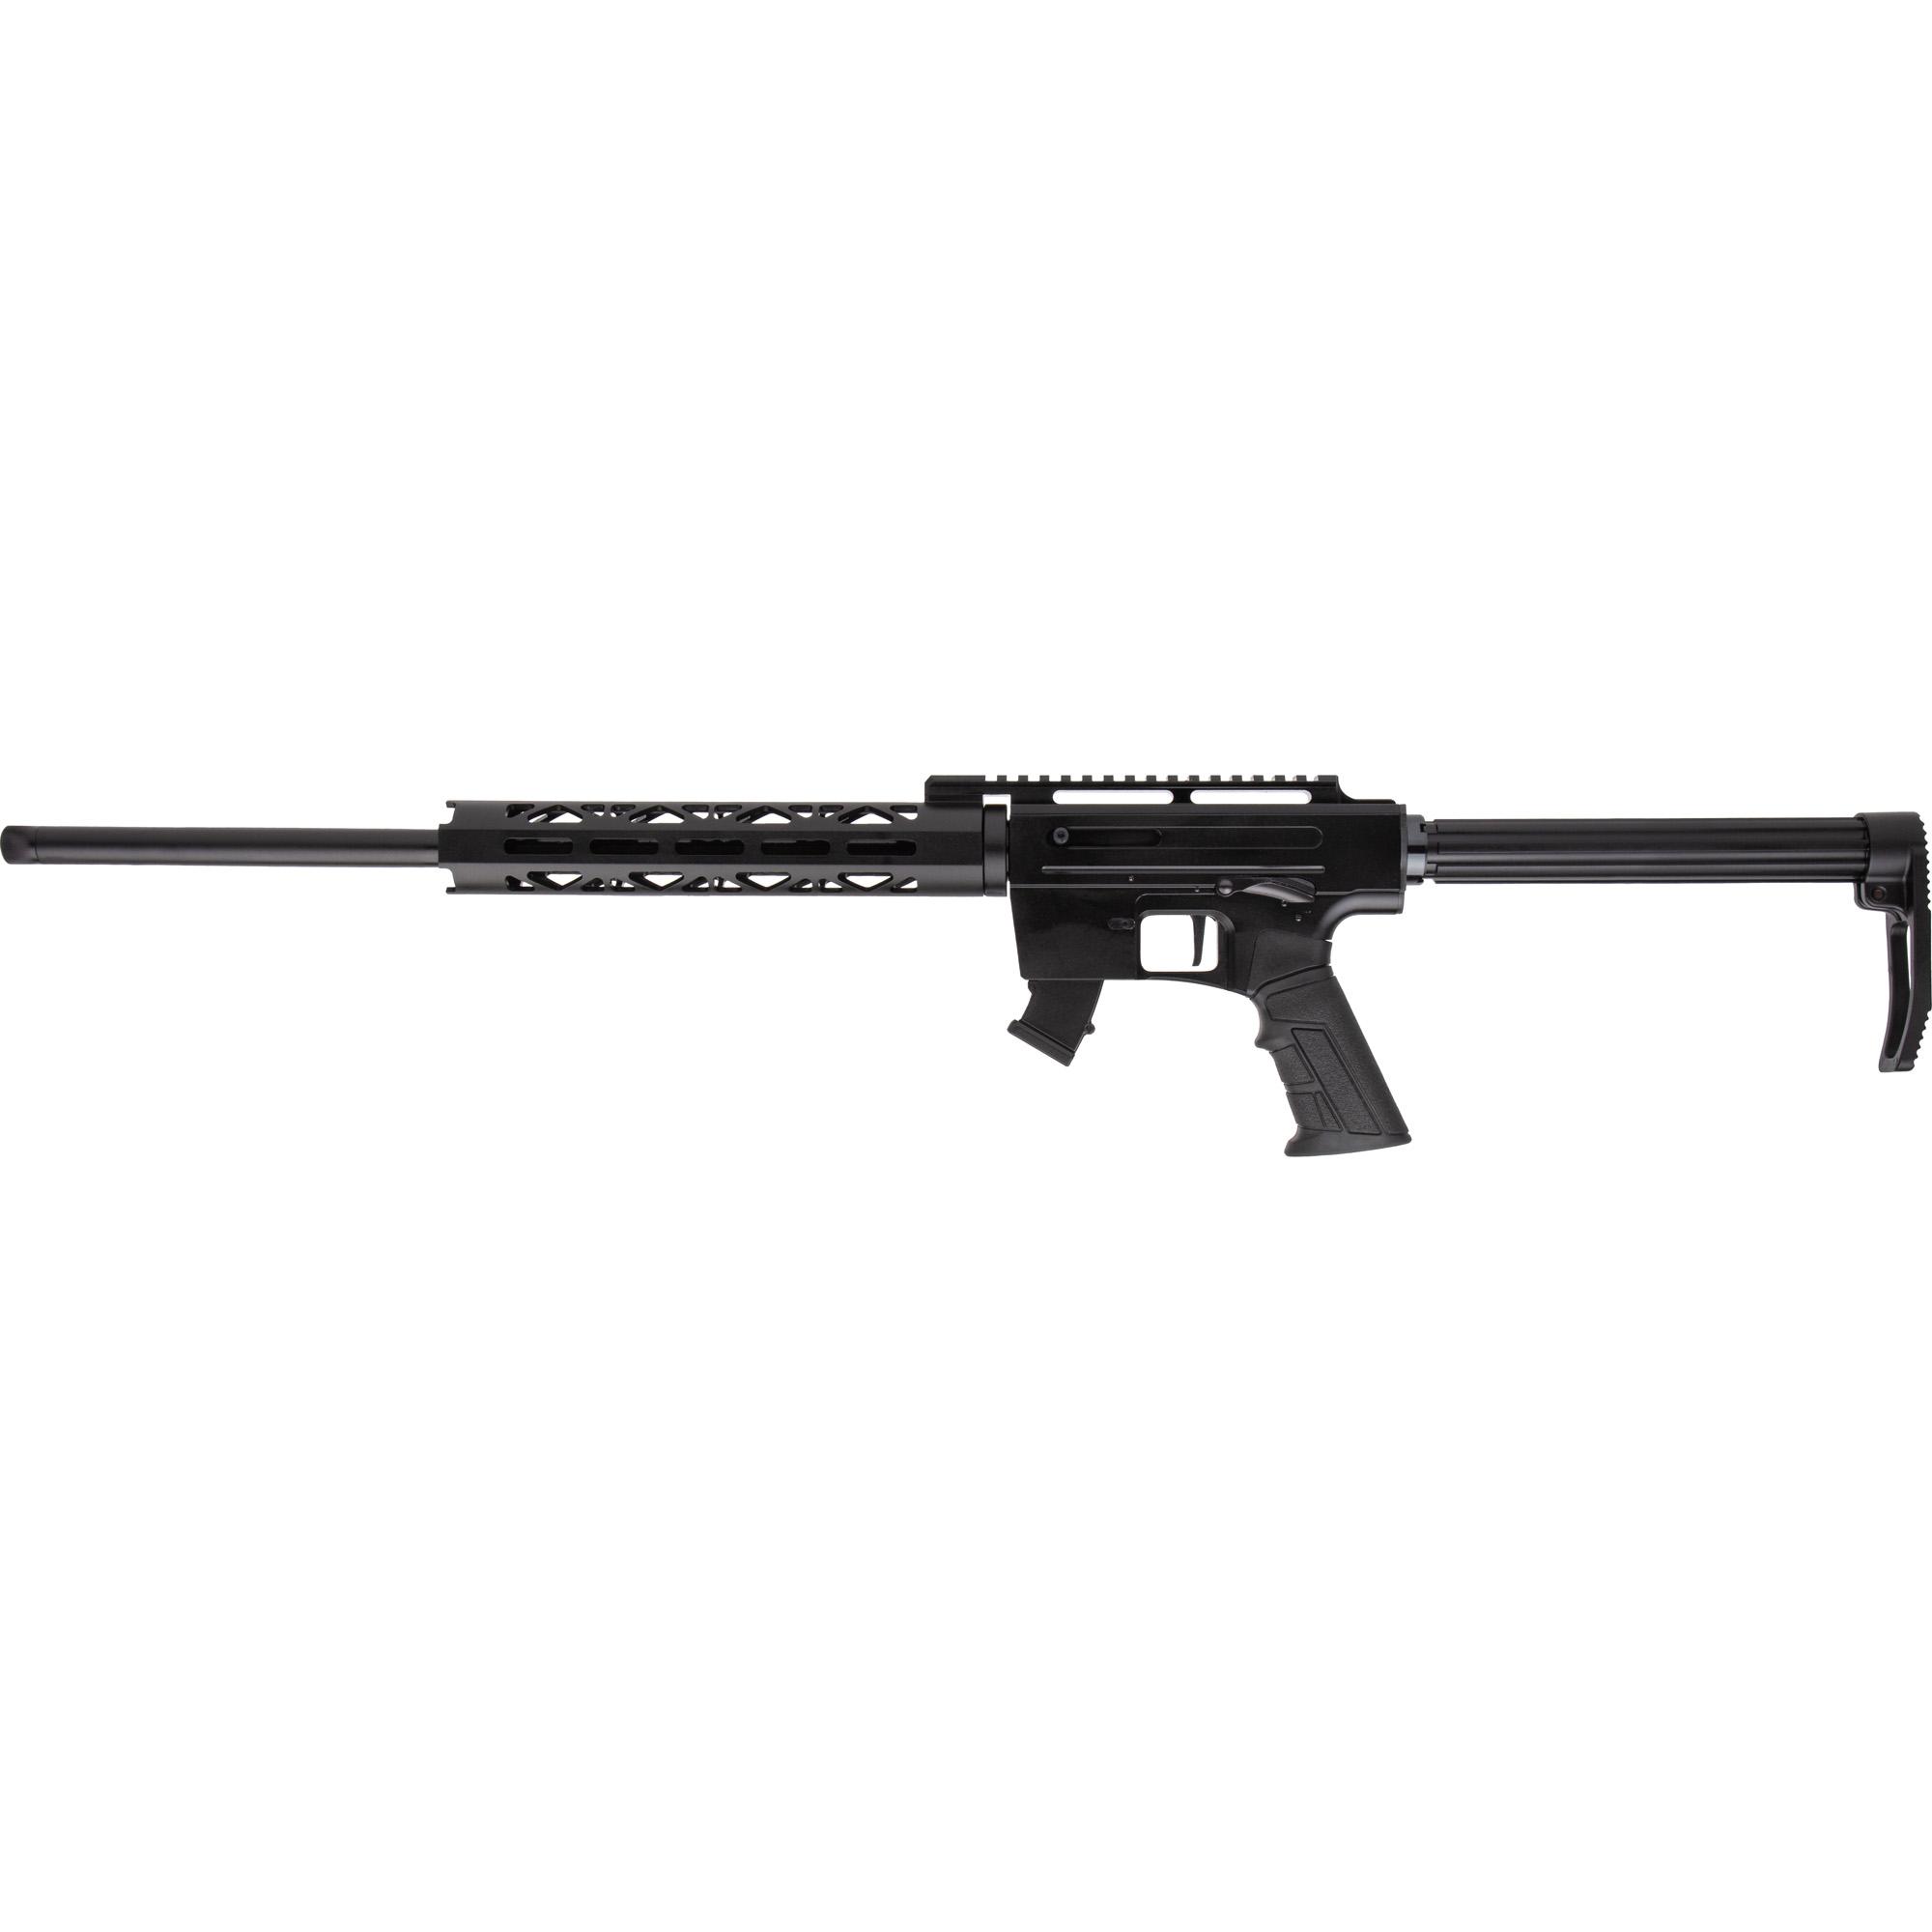 Long Guns RIA IMPORTS TM22 22LR 10RD 18" BLK image 1